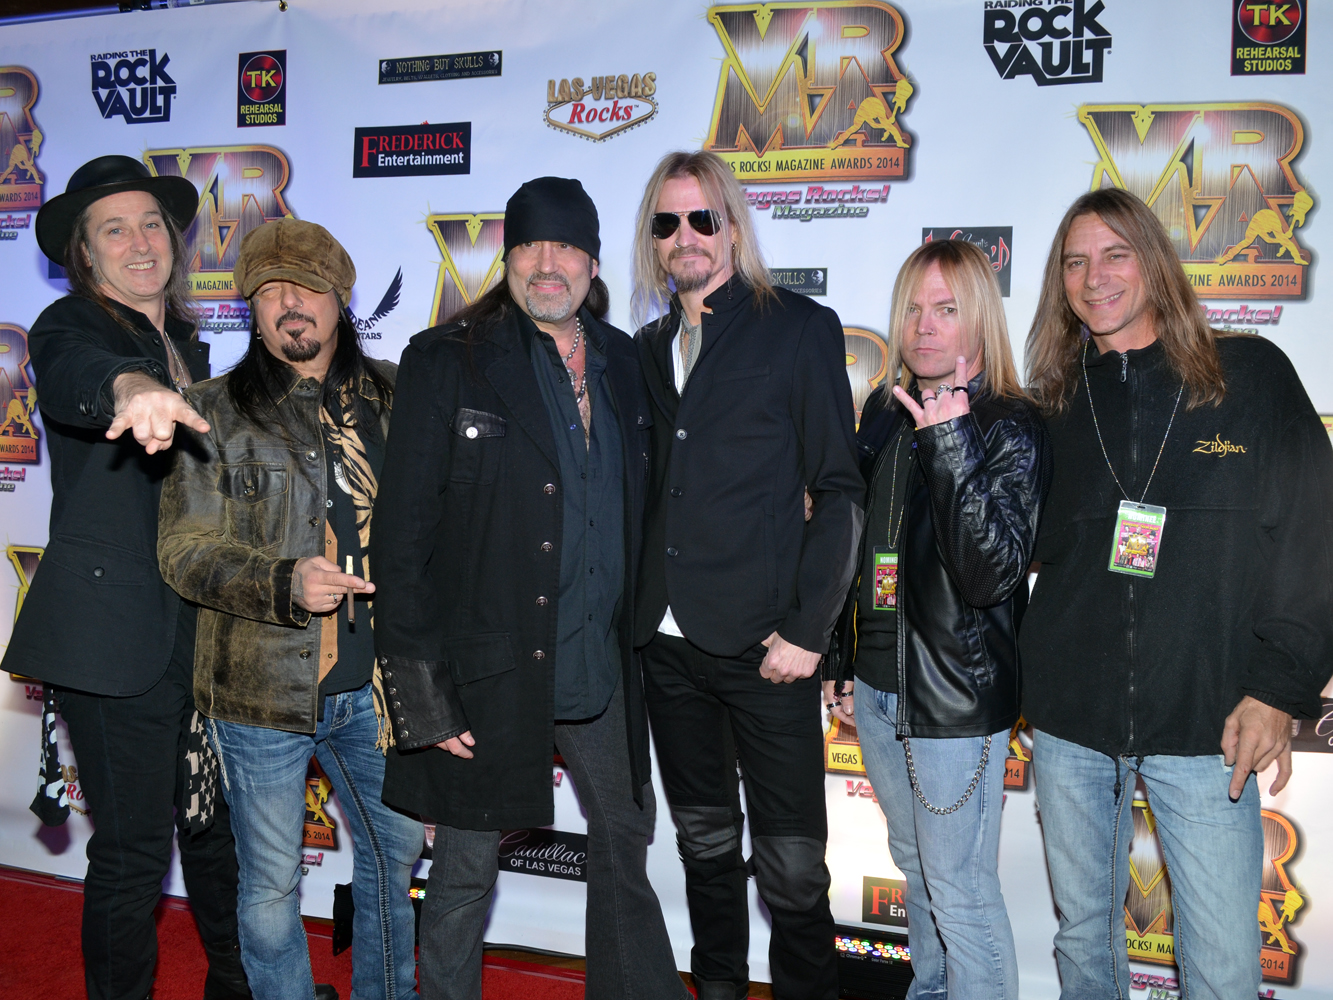 Counts 77 - Vegas Rocks Magazine Music Awards 2014 photo credit Stephen Thorburn 63539